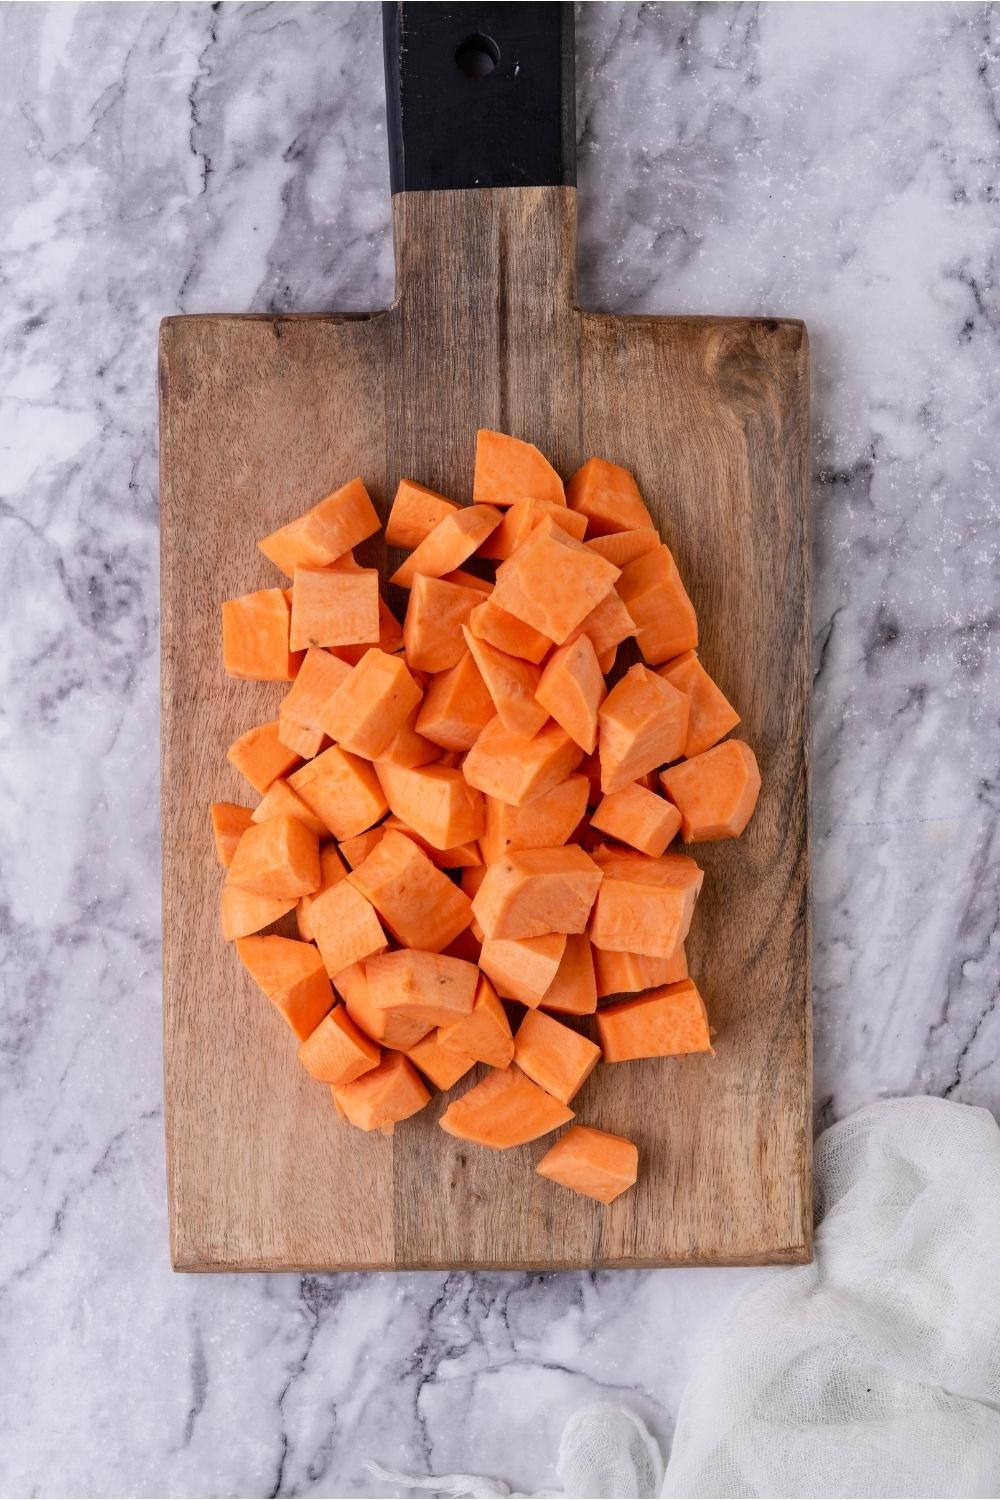 Sweet potato cubes on a wood cutting board.